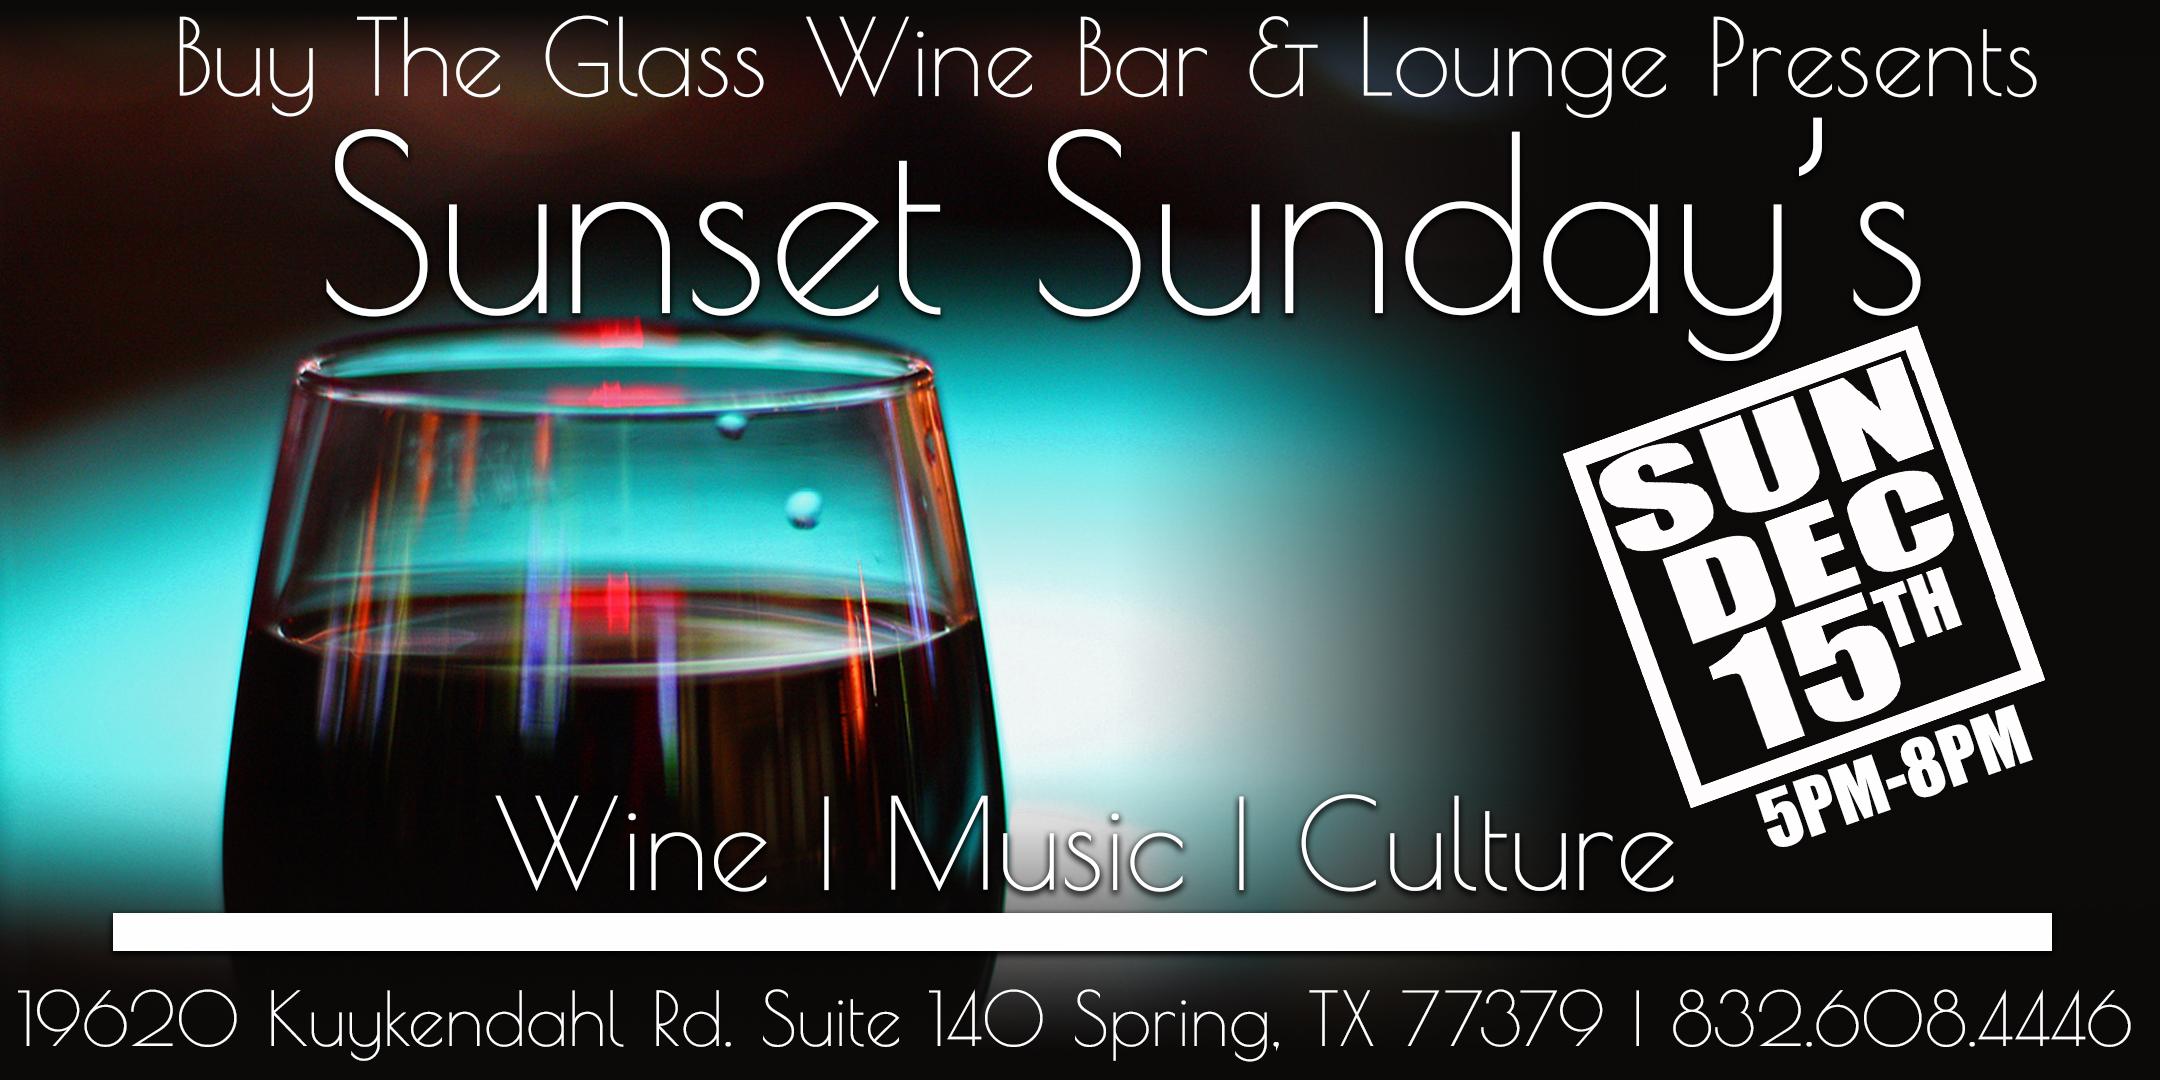 Sunset Sunday’s | LIVE MUSIC & Wine